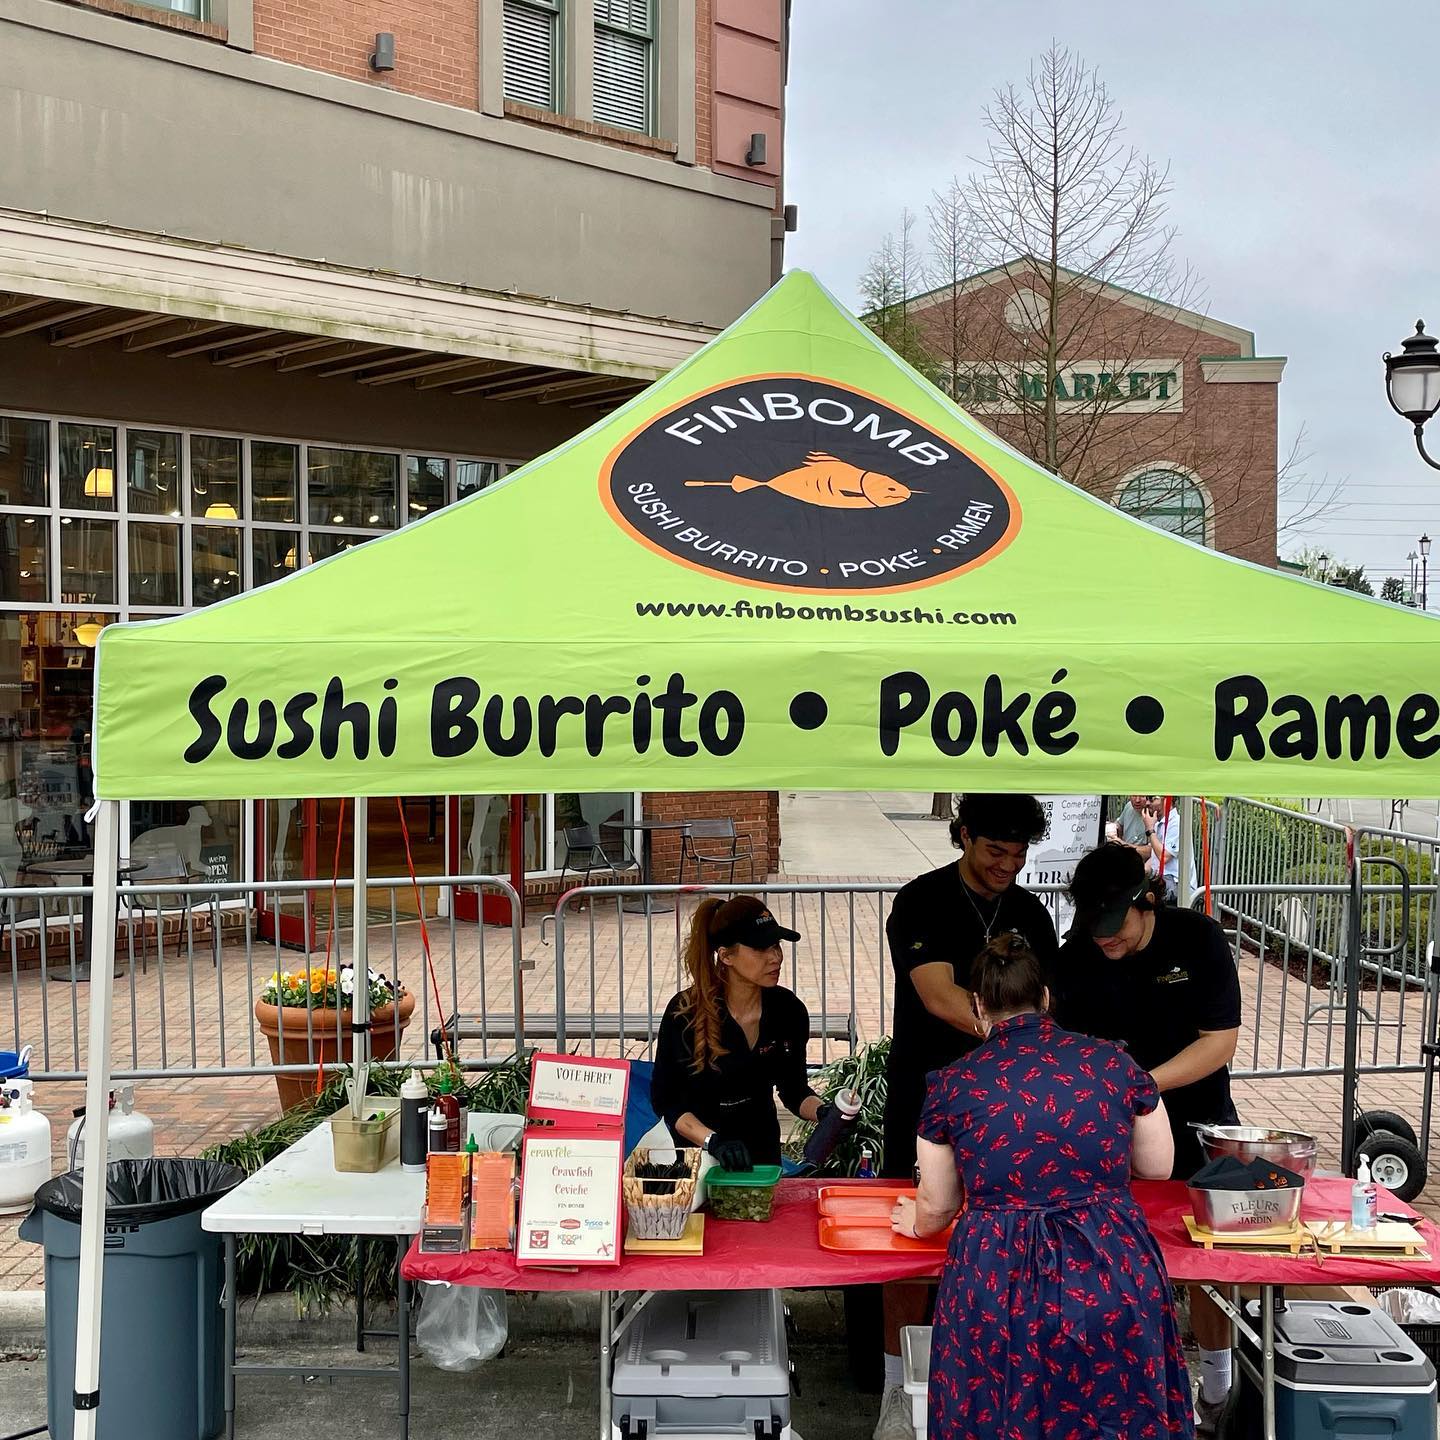 FinBomb Sushi Burrito Pokè Ramen